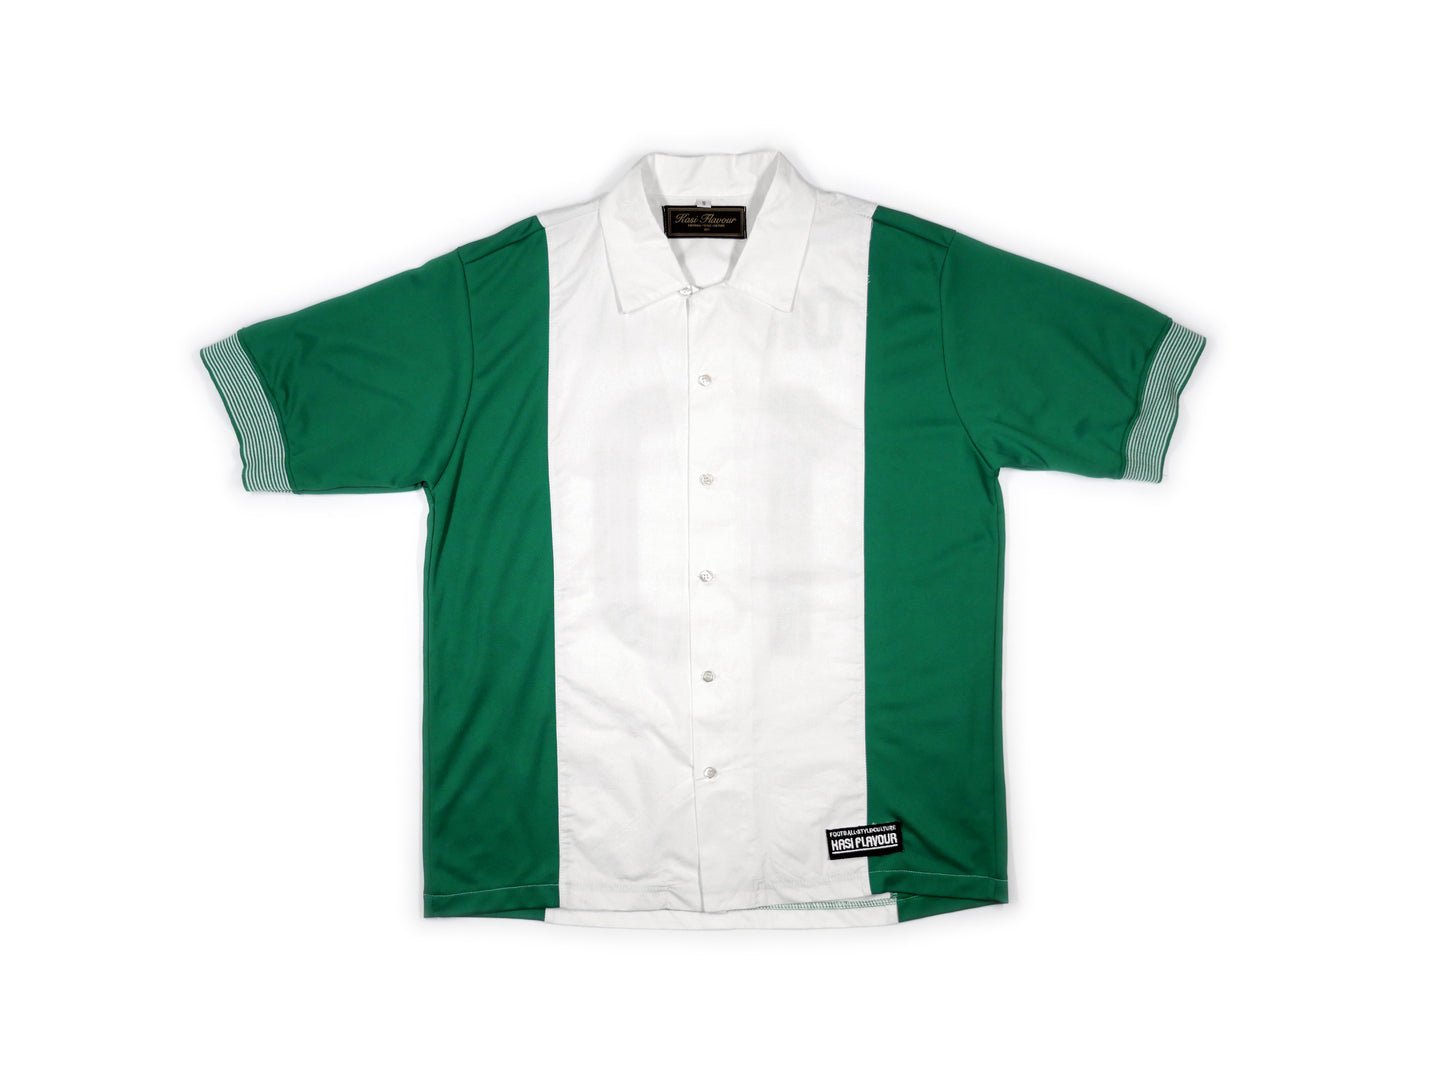 Kasi Flavour Okocha Shirt - Green/White